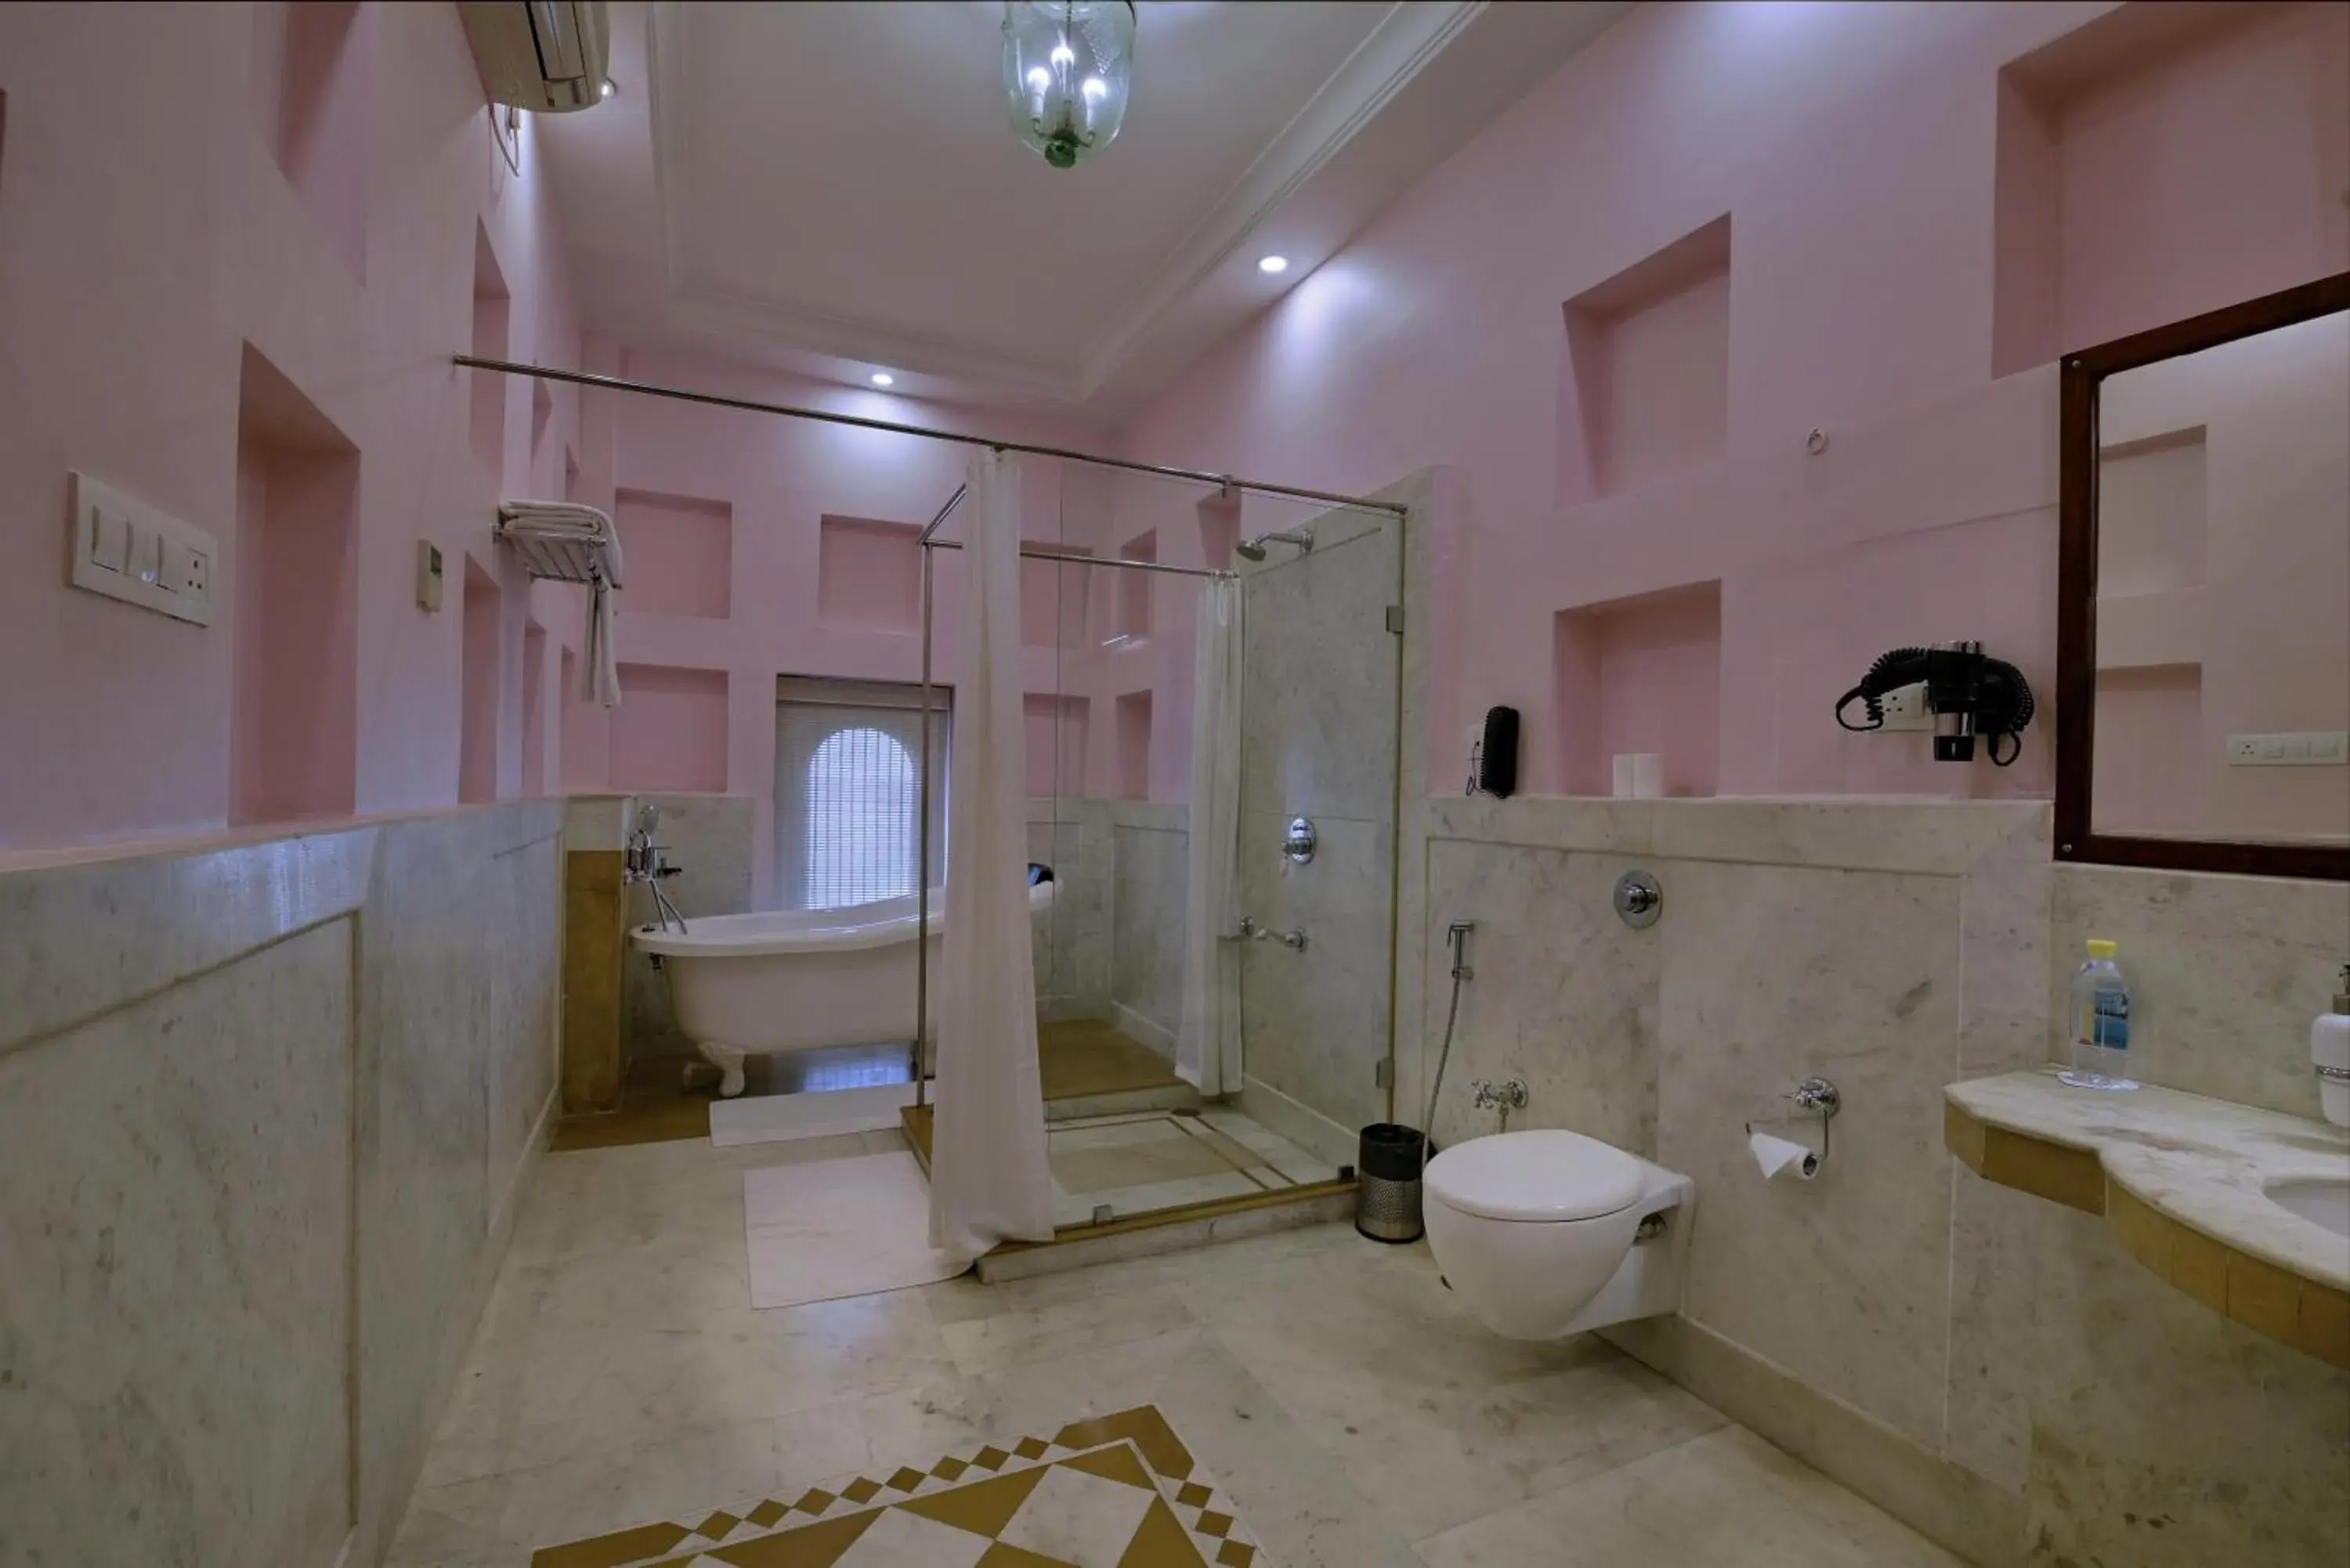 Toilet, Bathroom in BrijRama Palace, Varanasi by the Ganges